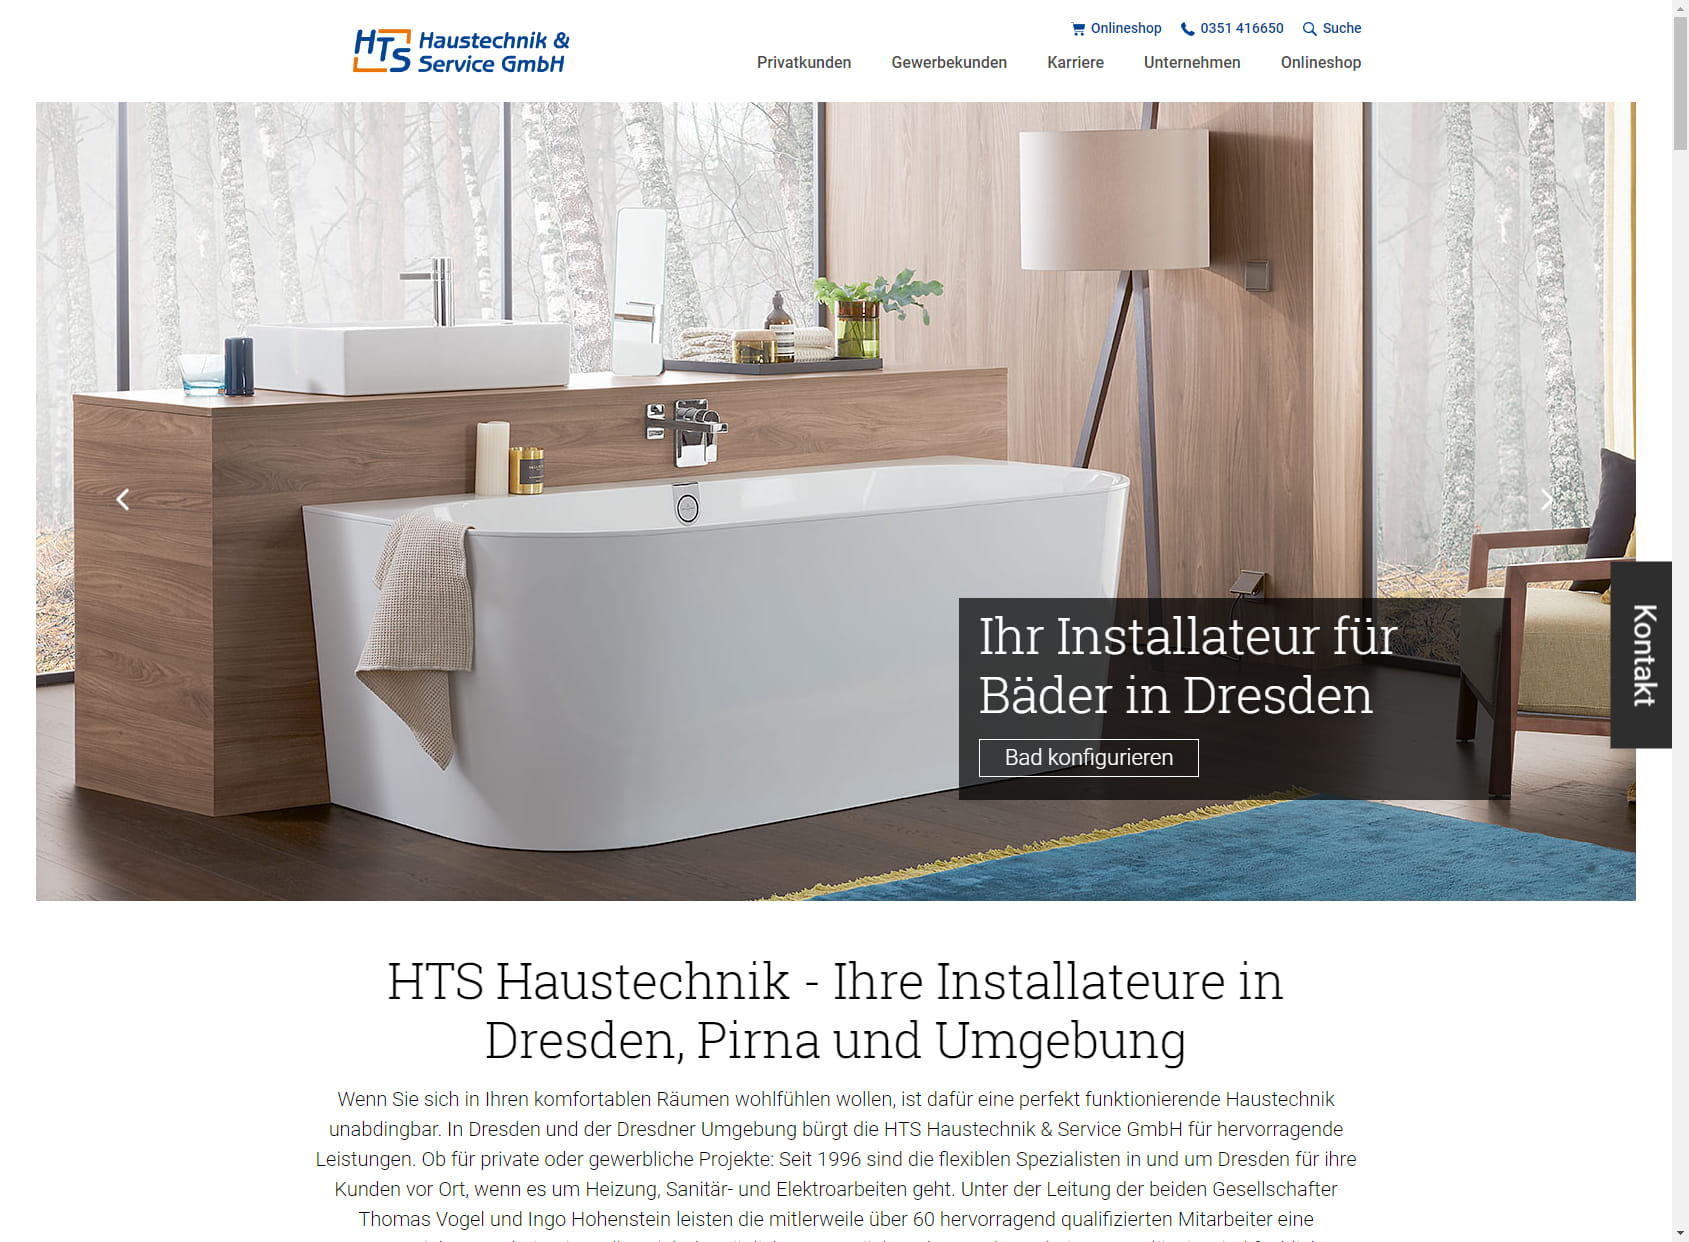 HTS Haustechnik & Service GmbH